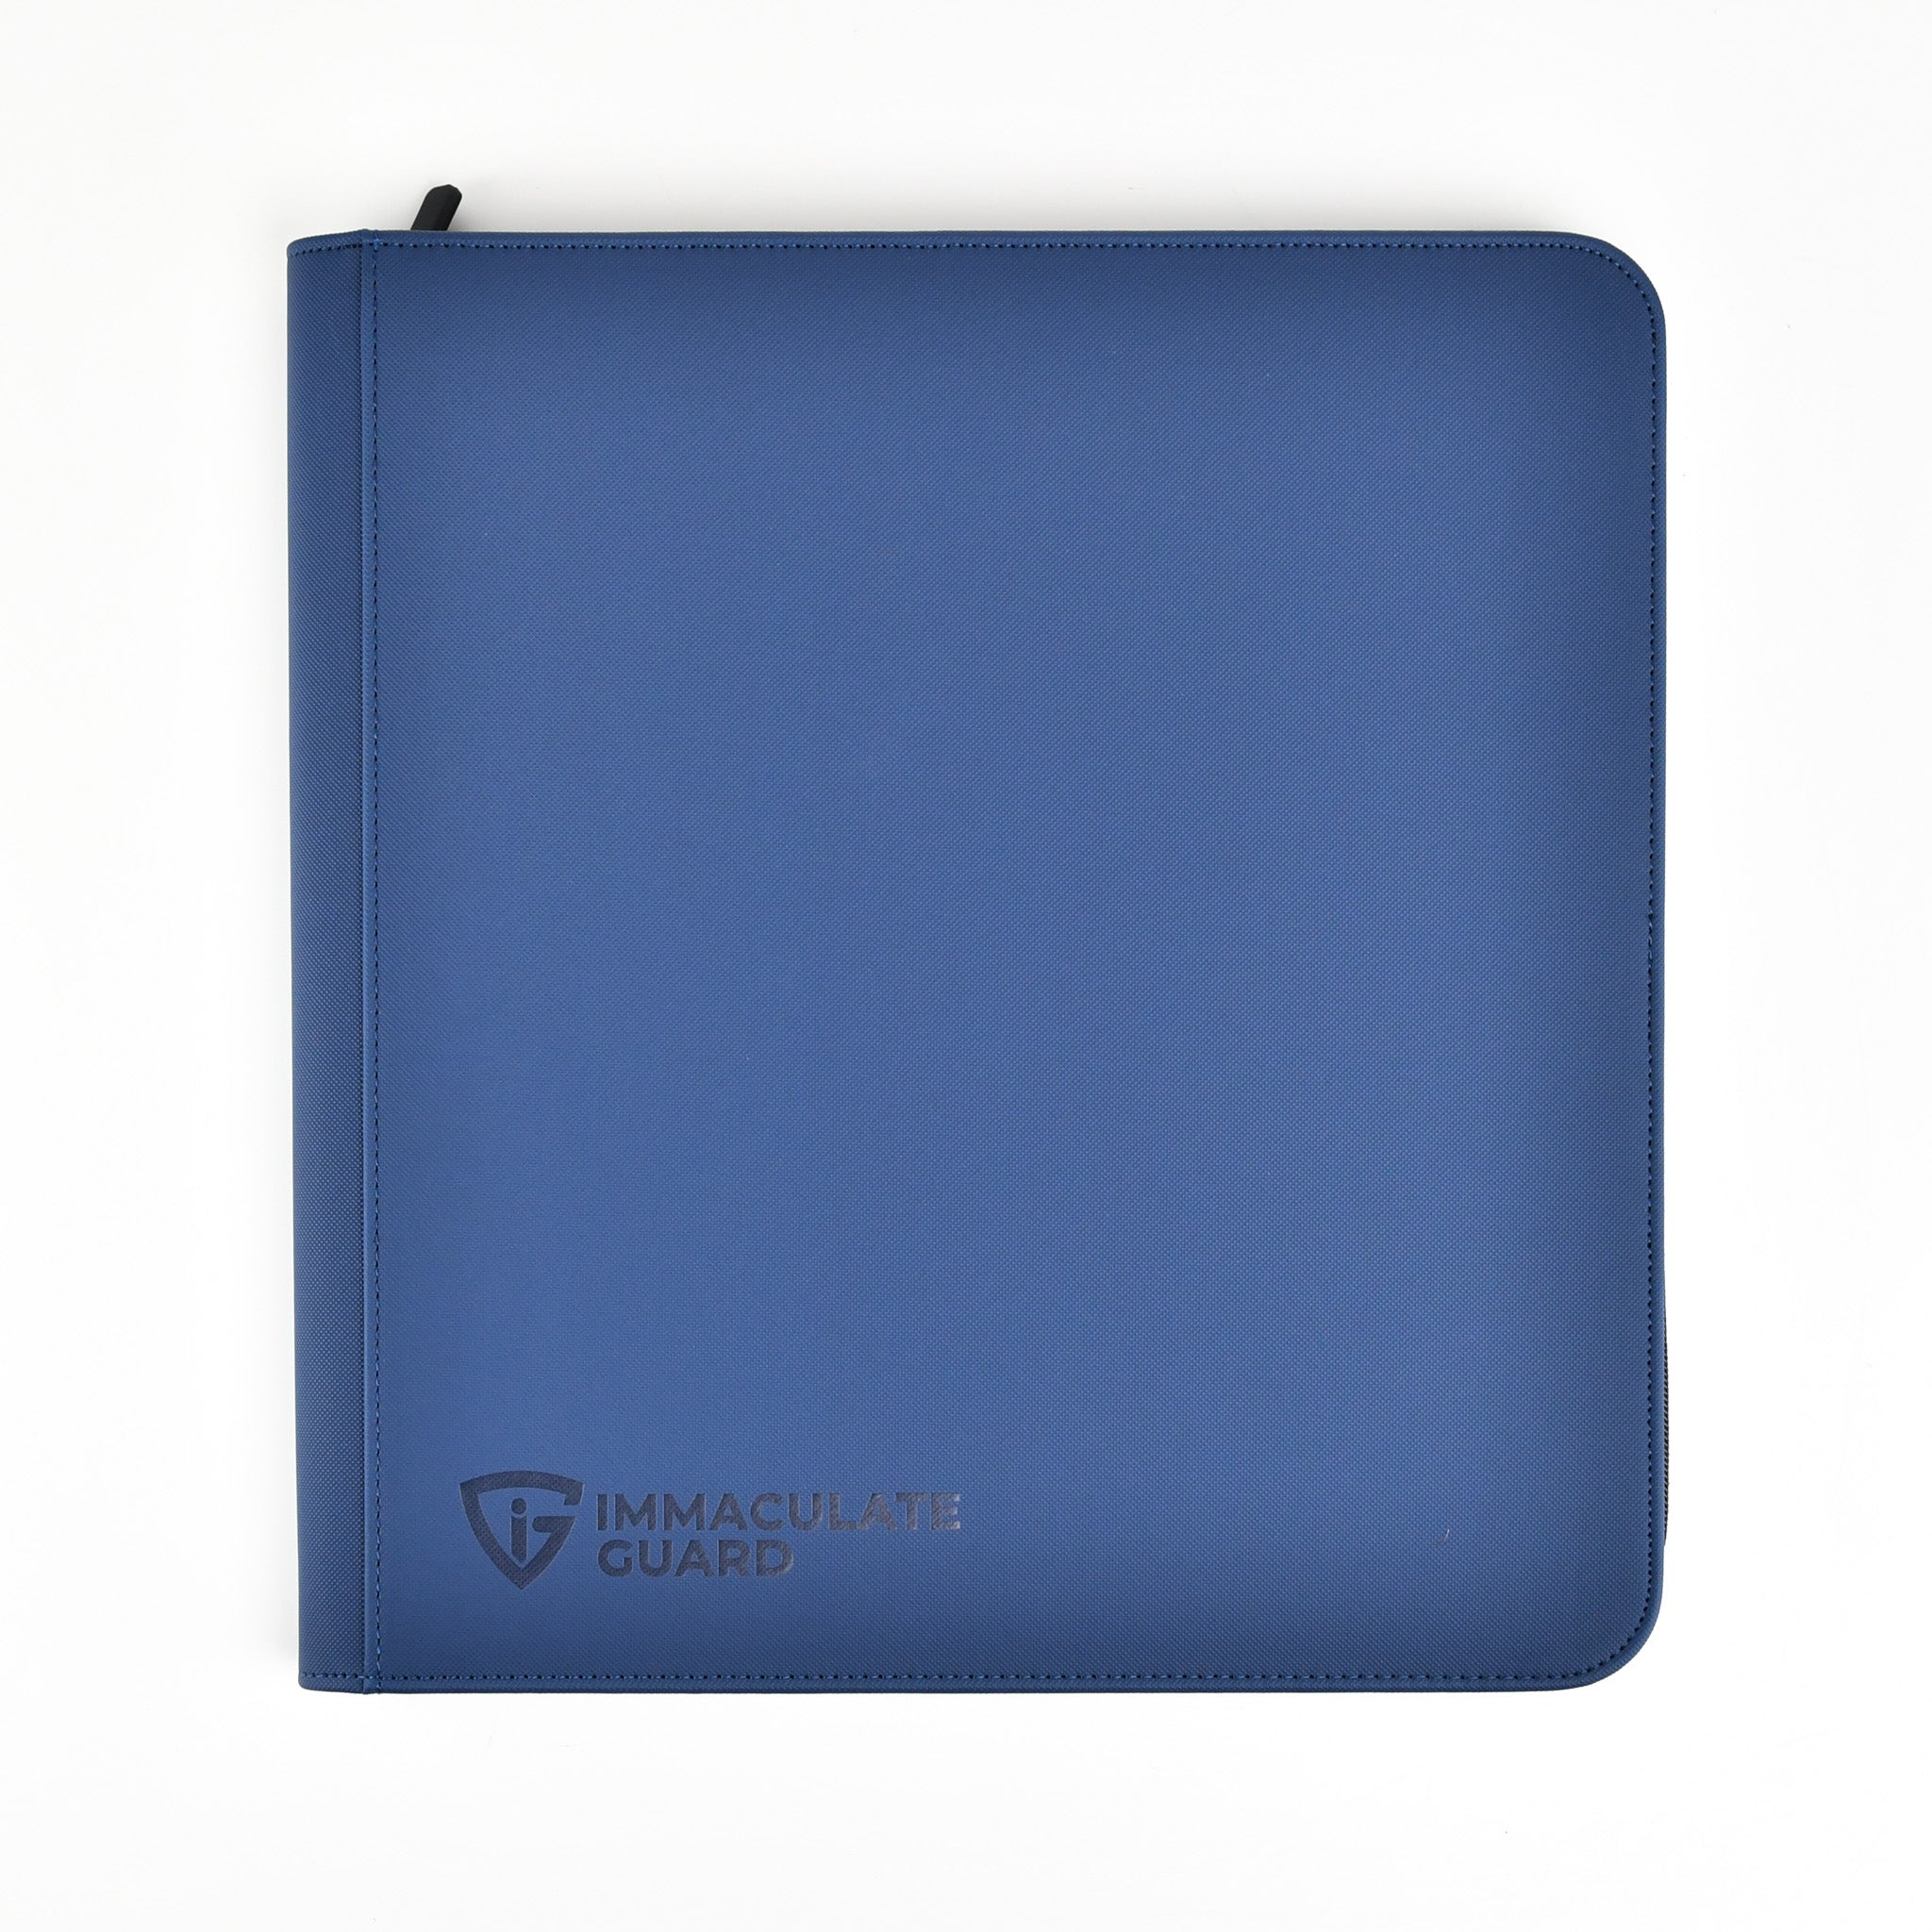 Binder - Immaculate Guard Side Loading 12 Pocket - Premium Leather: Blue